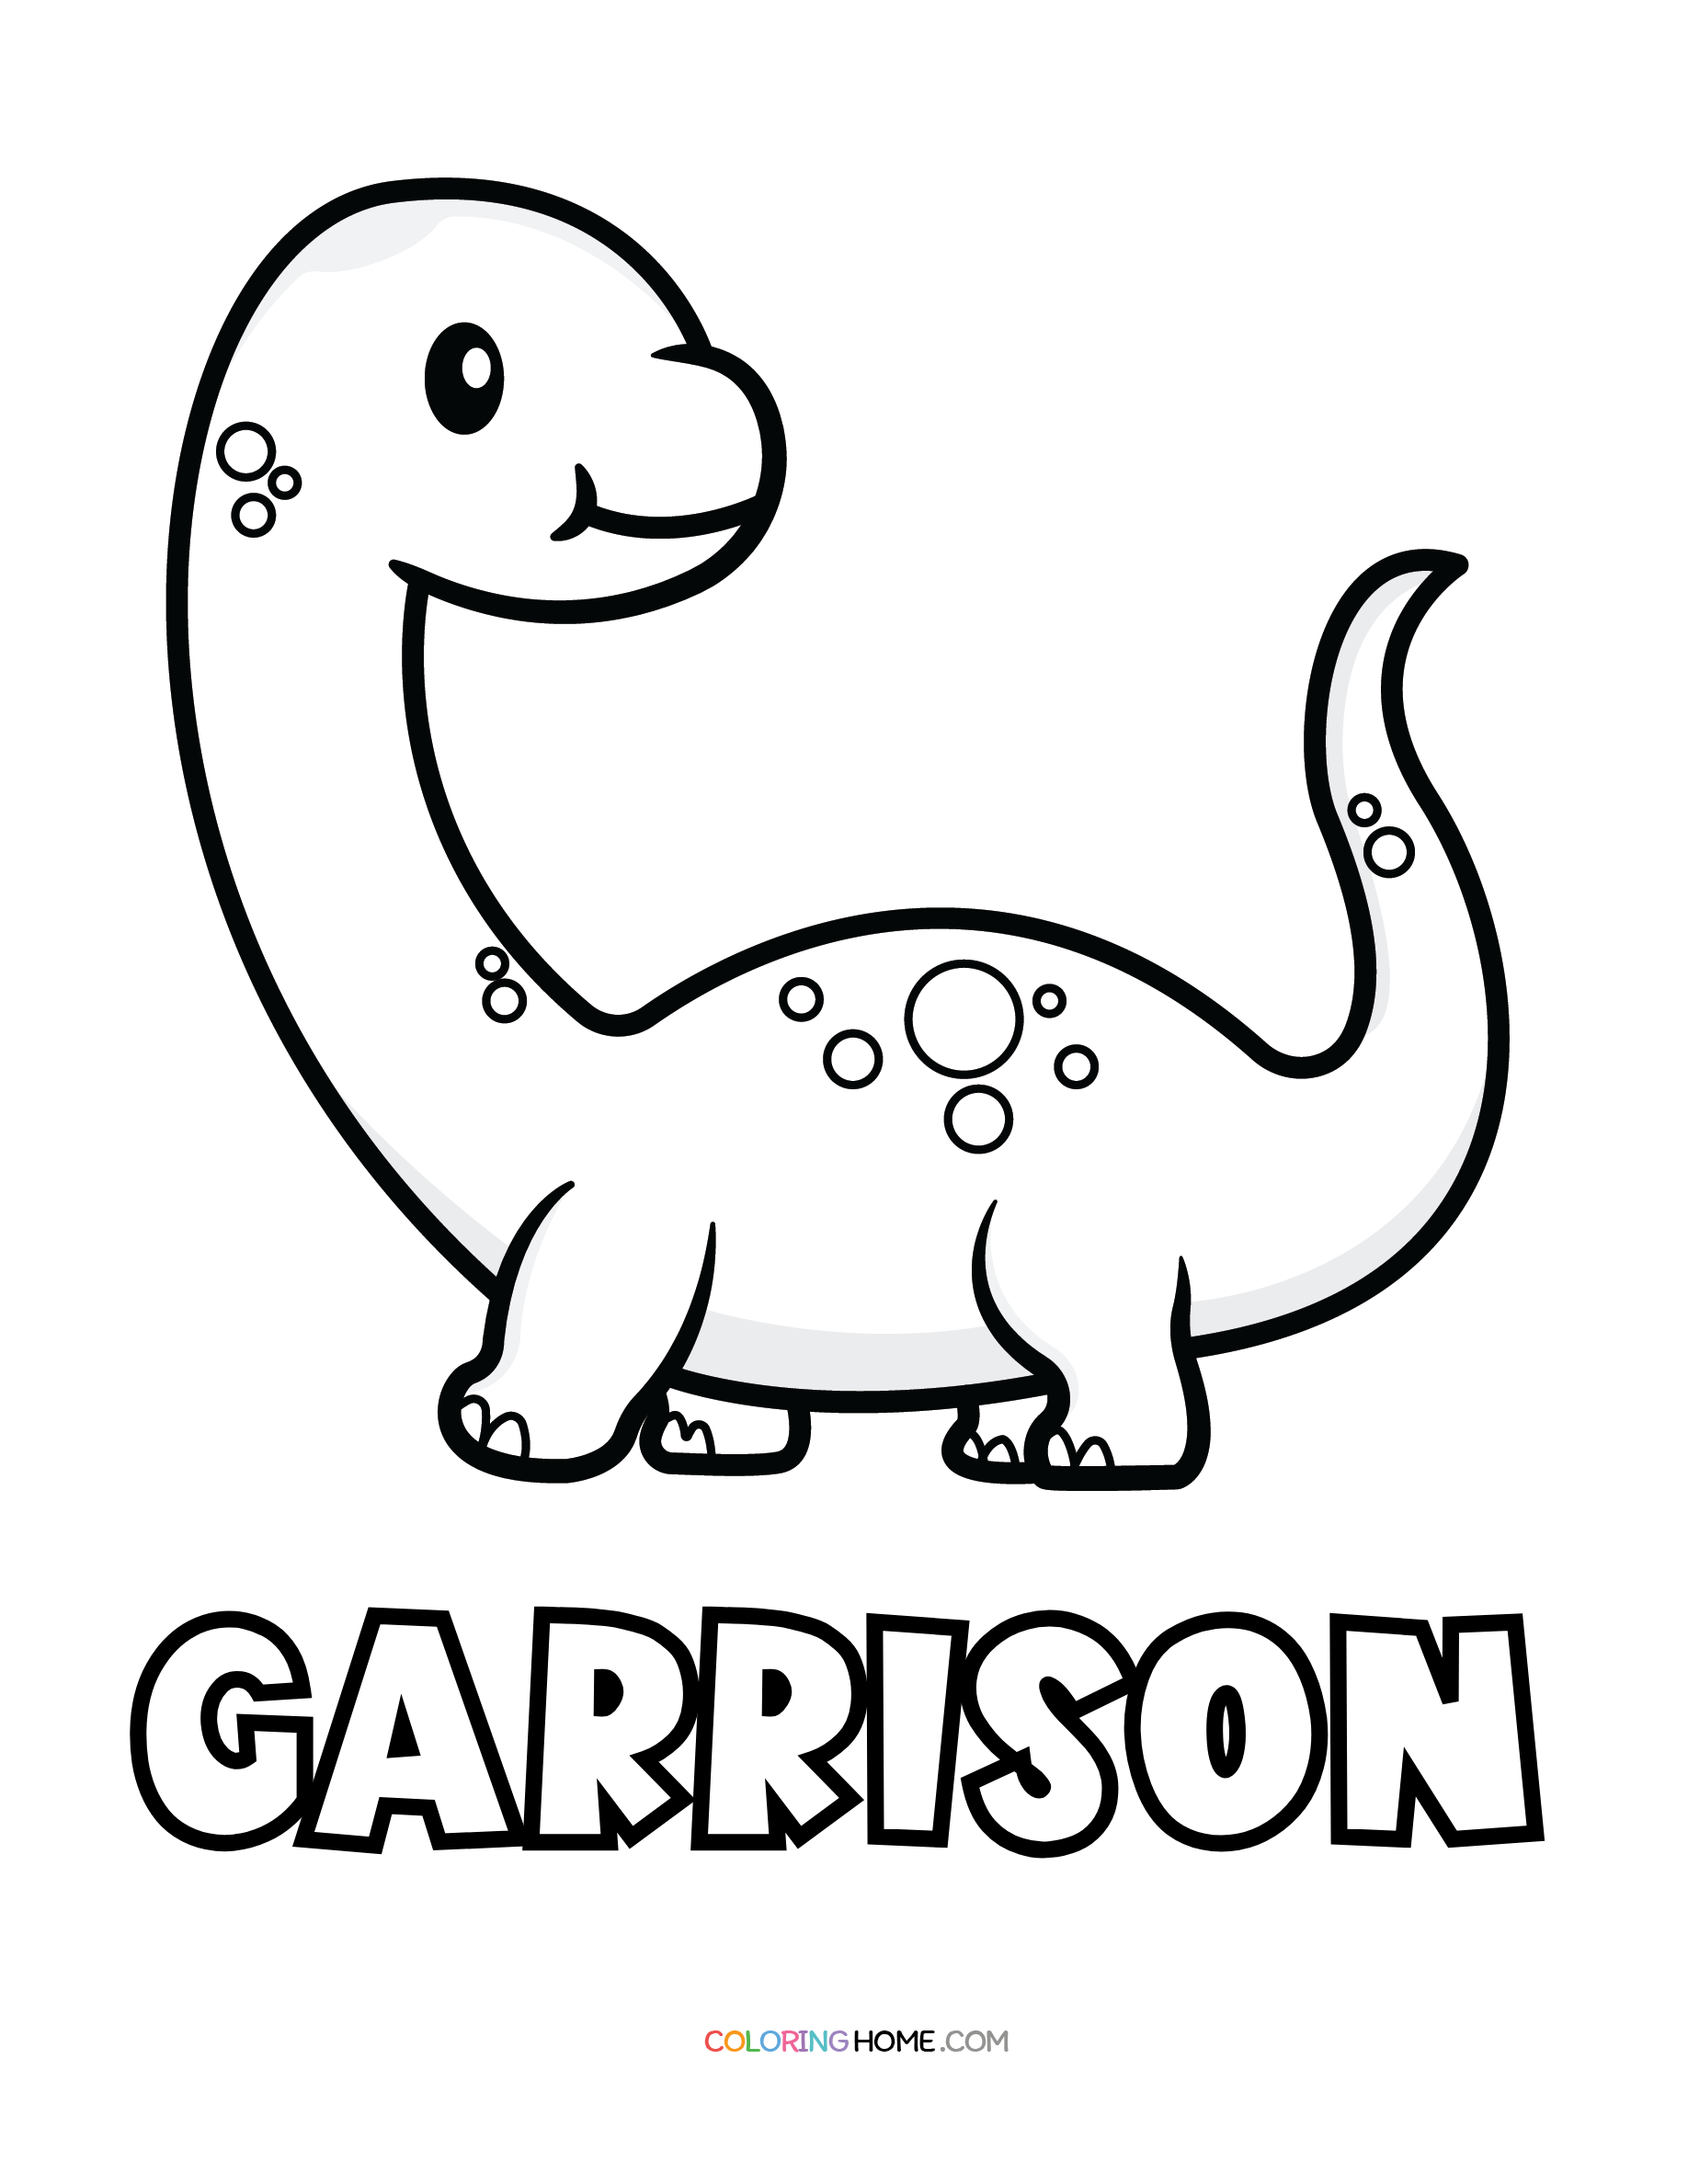 Garrison dinosaur coloring page